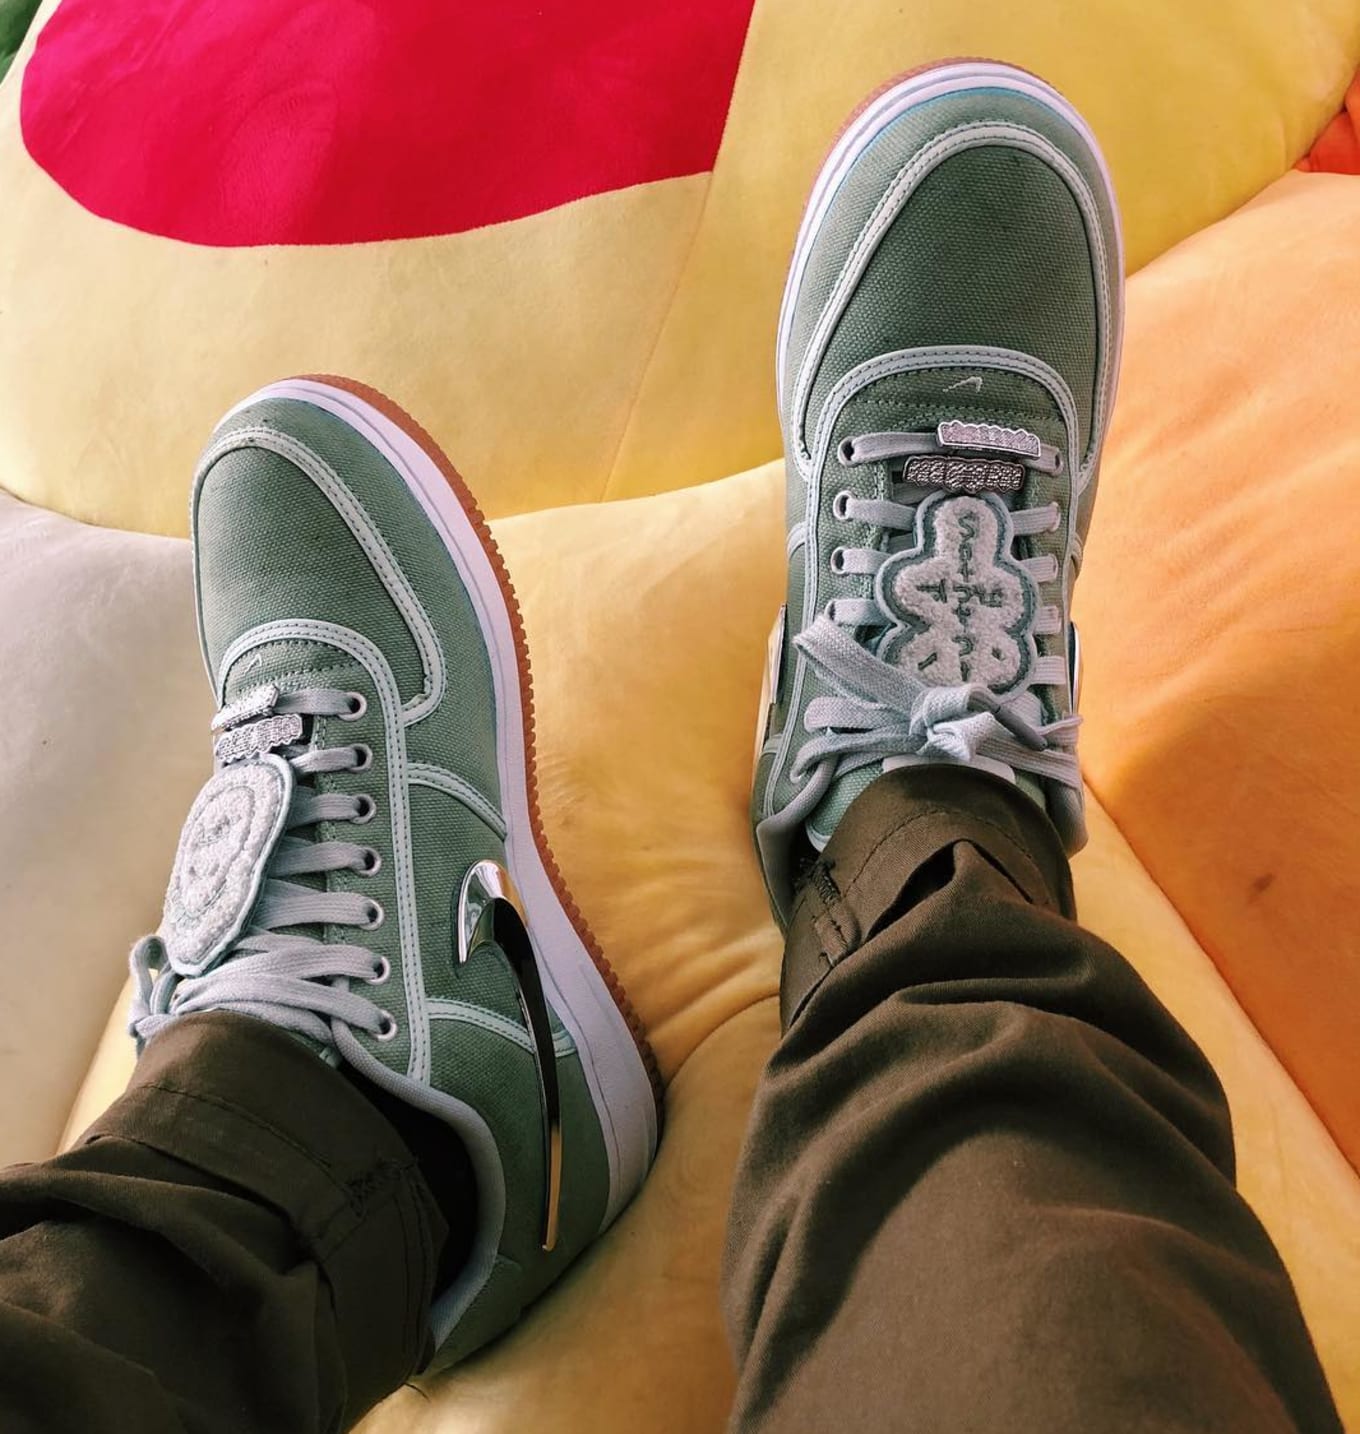 travis scott shoes green